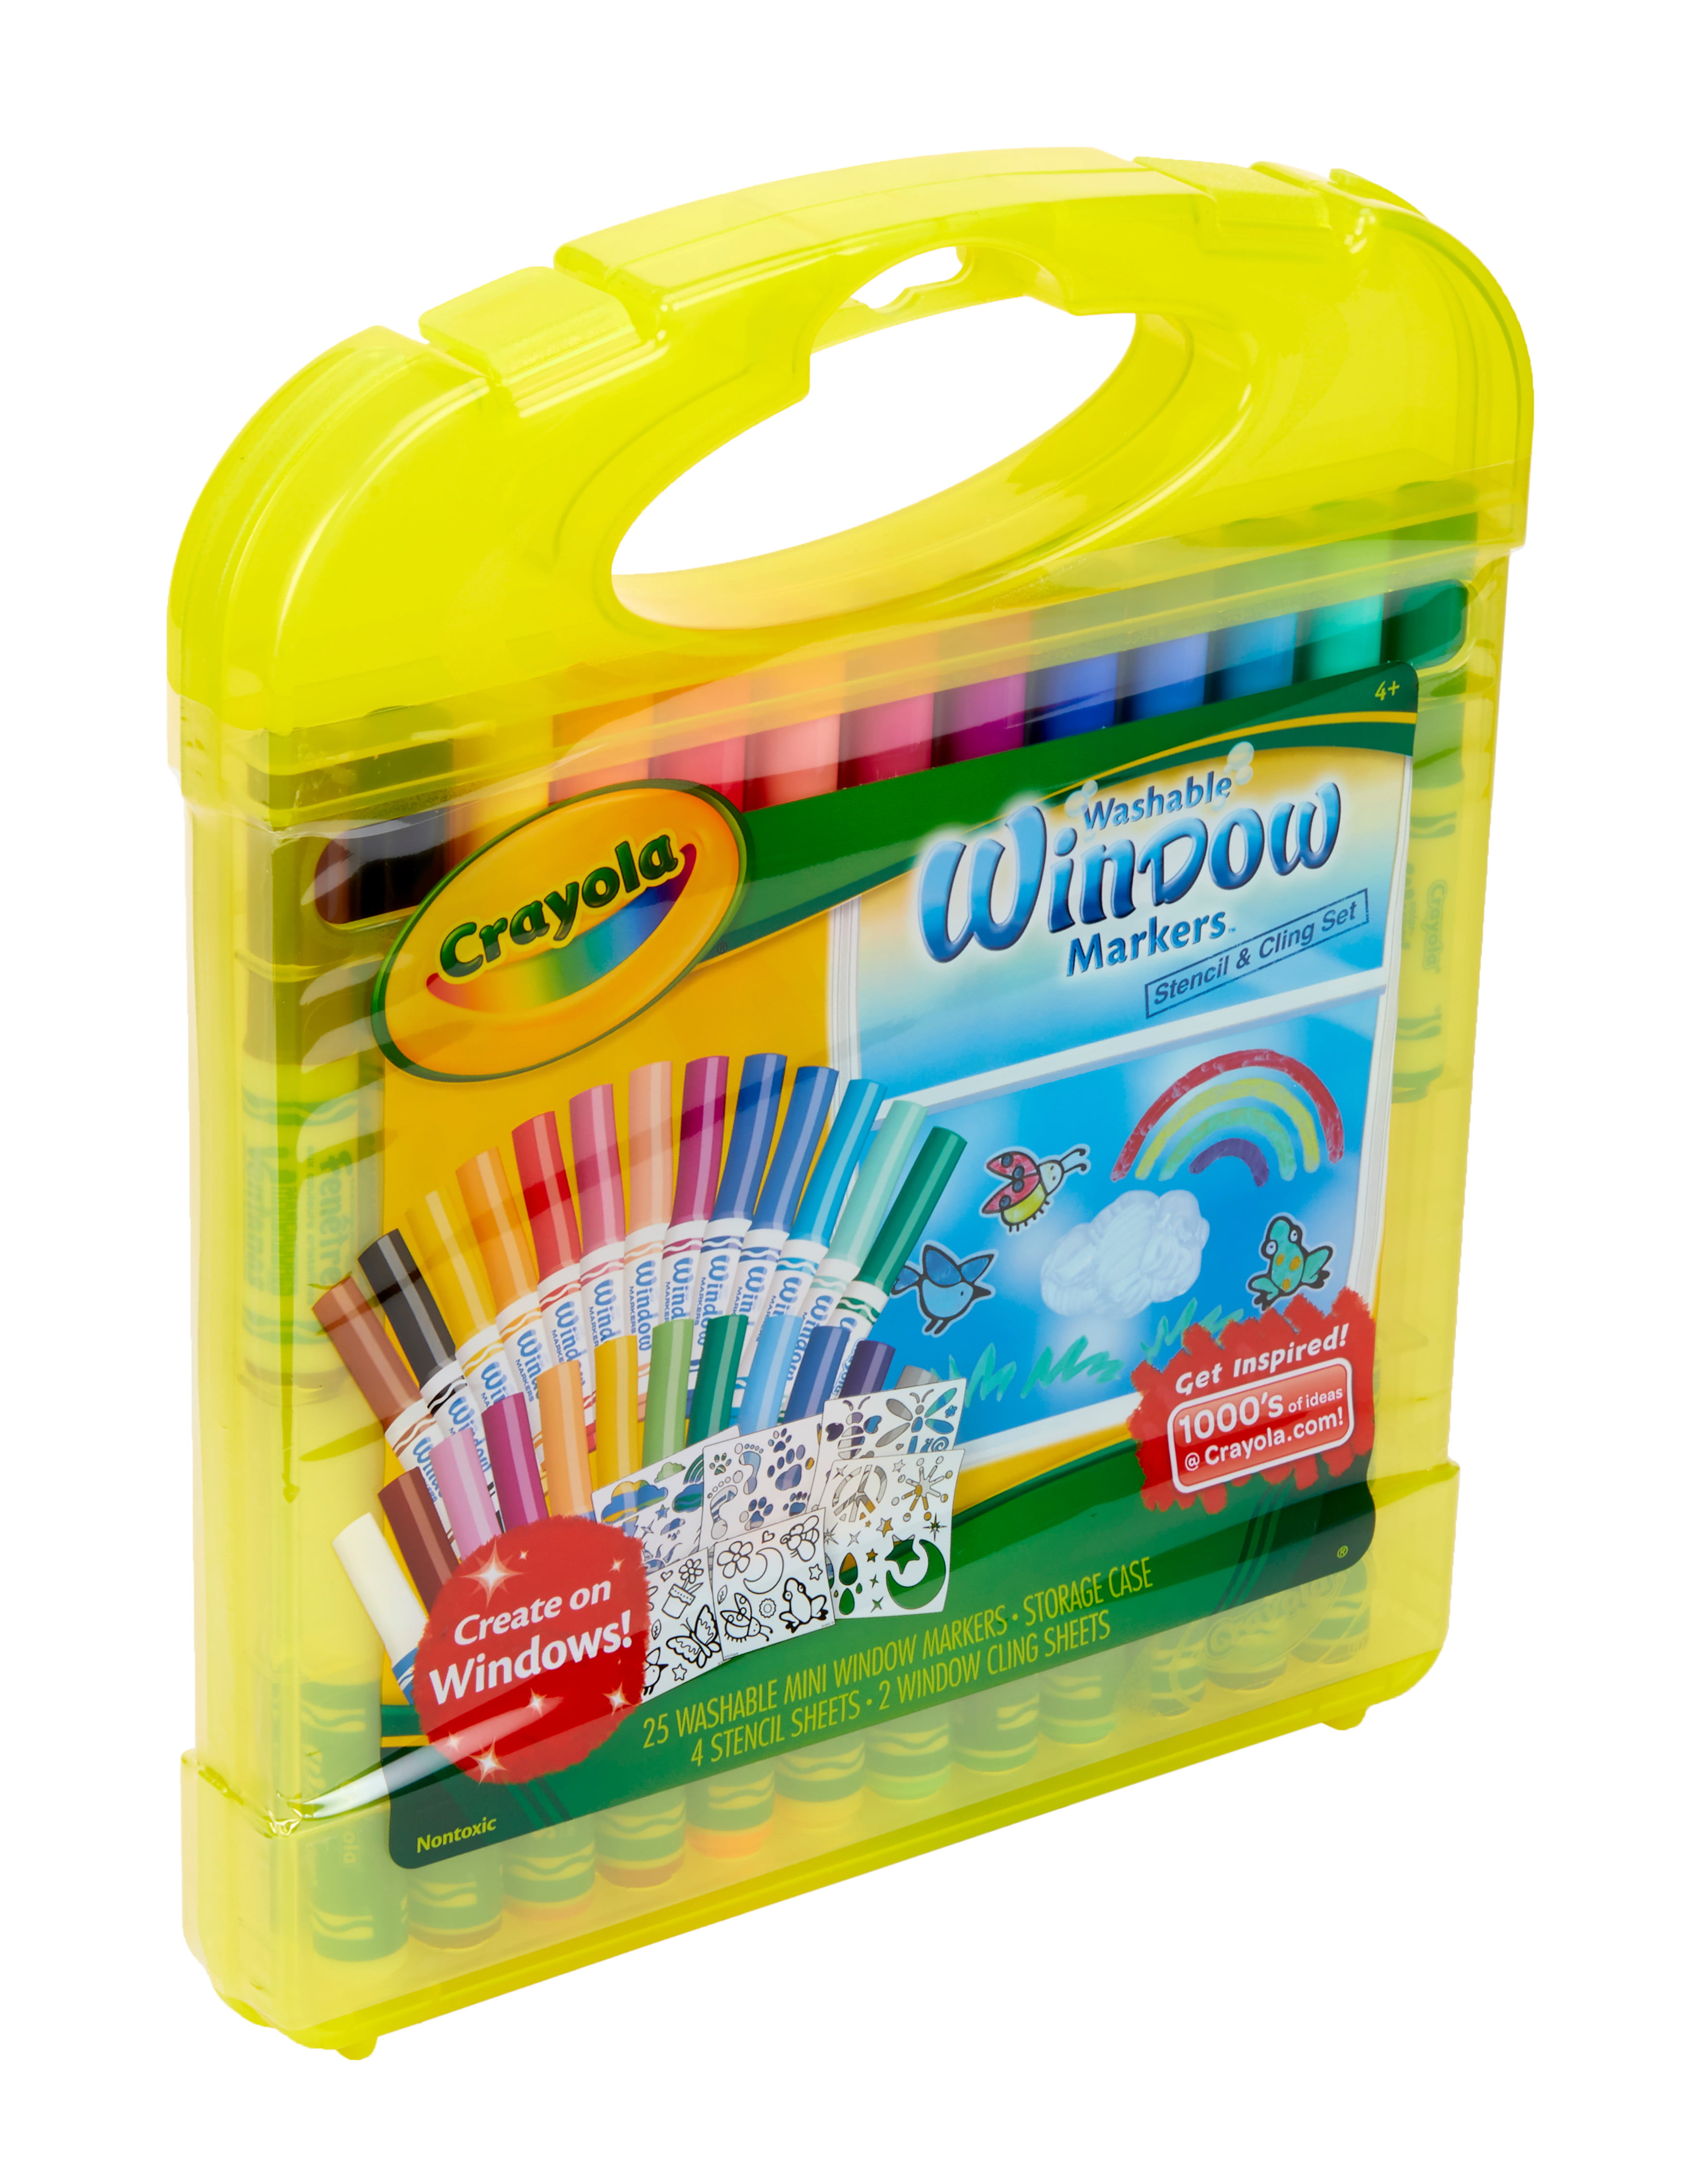 Crayola Washable Window Markers, Window Decorations, Gift, 8 Count (58-8165)